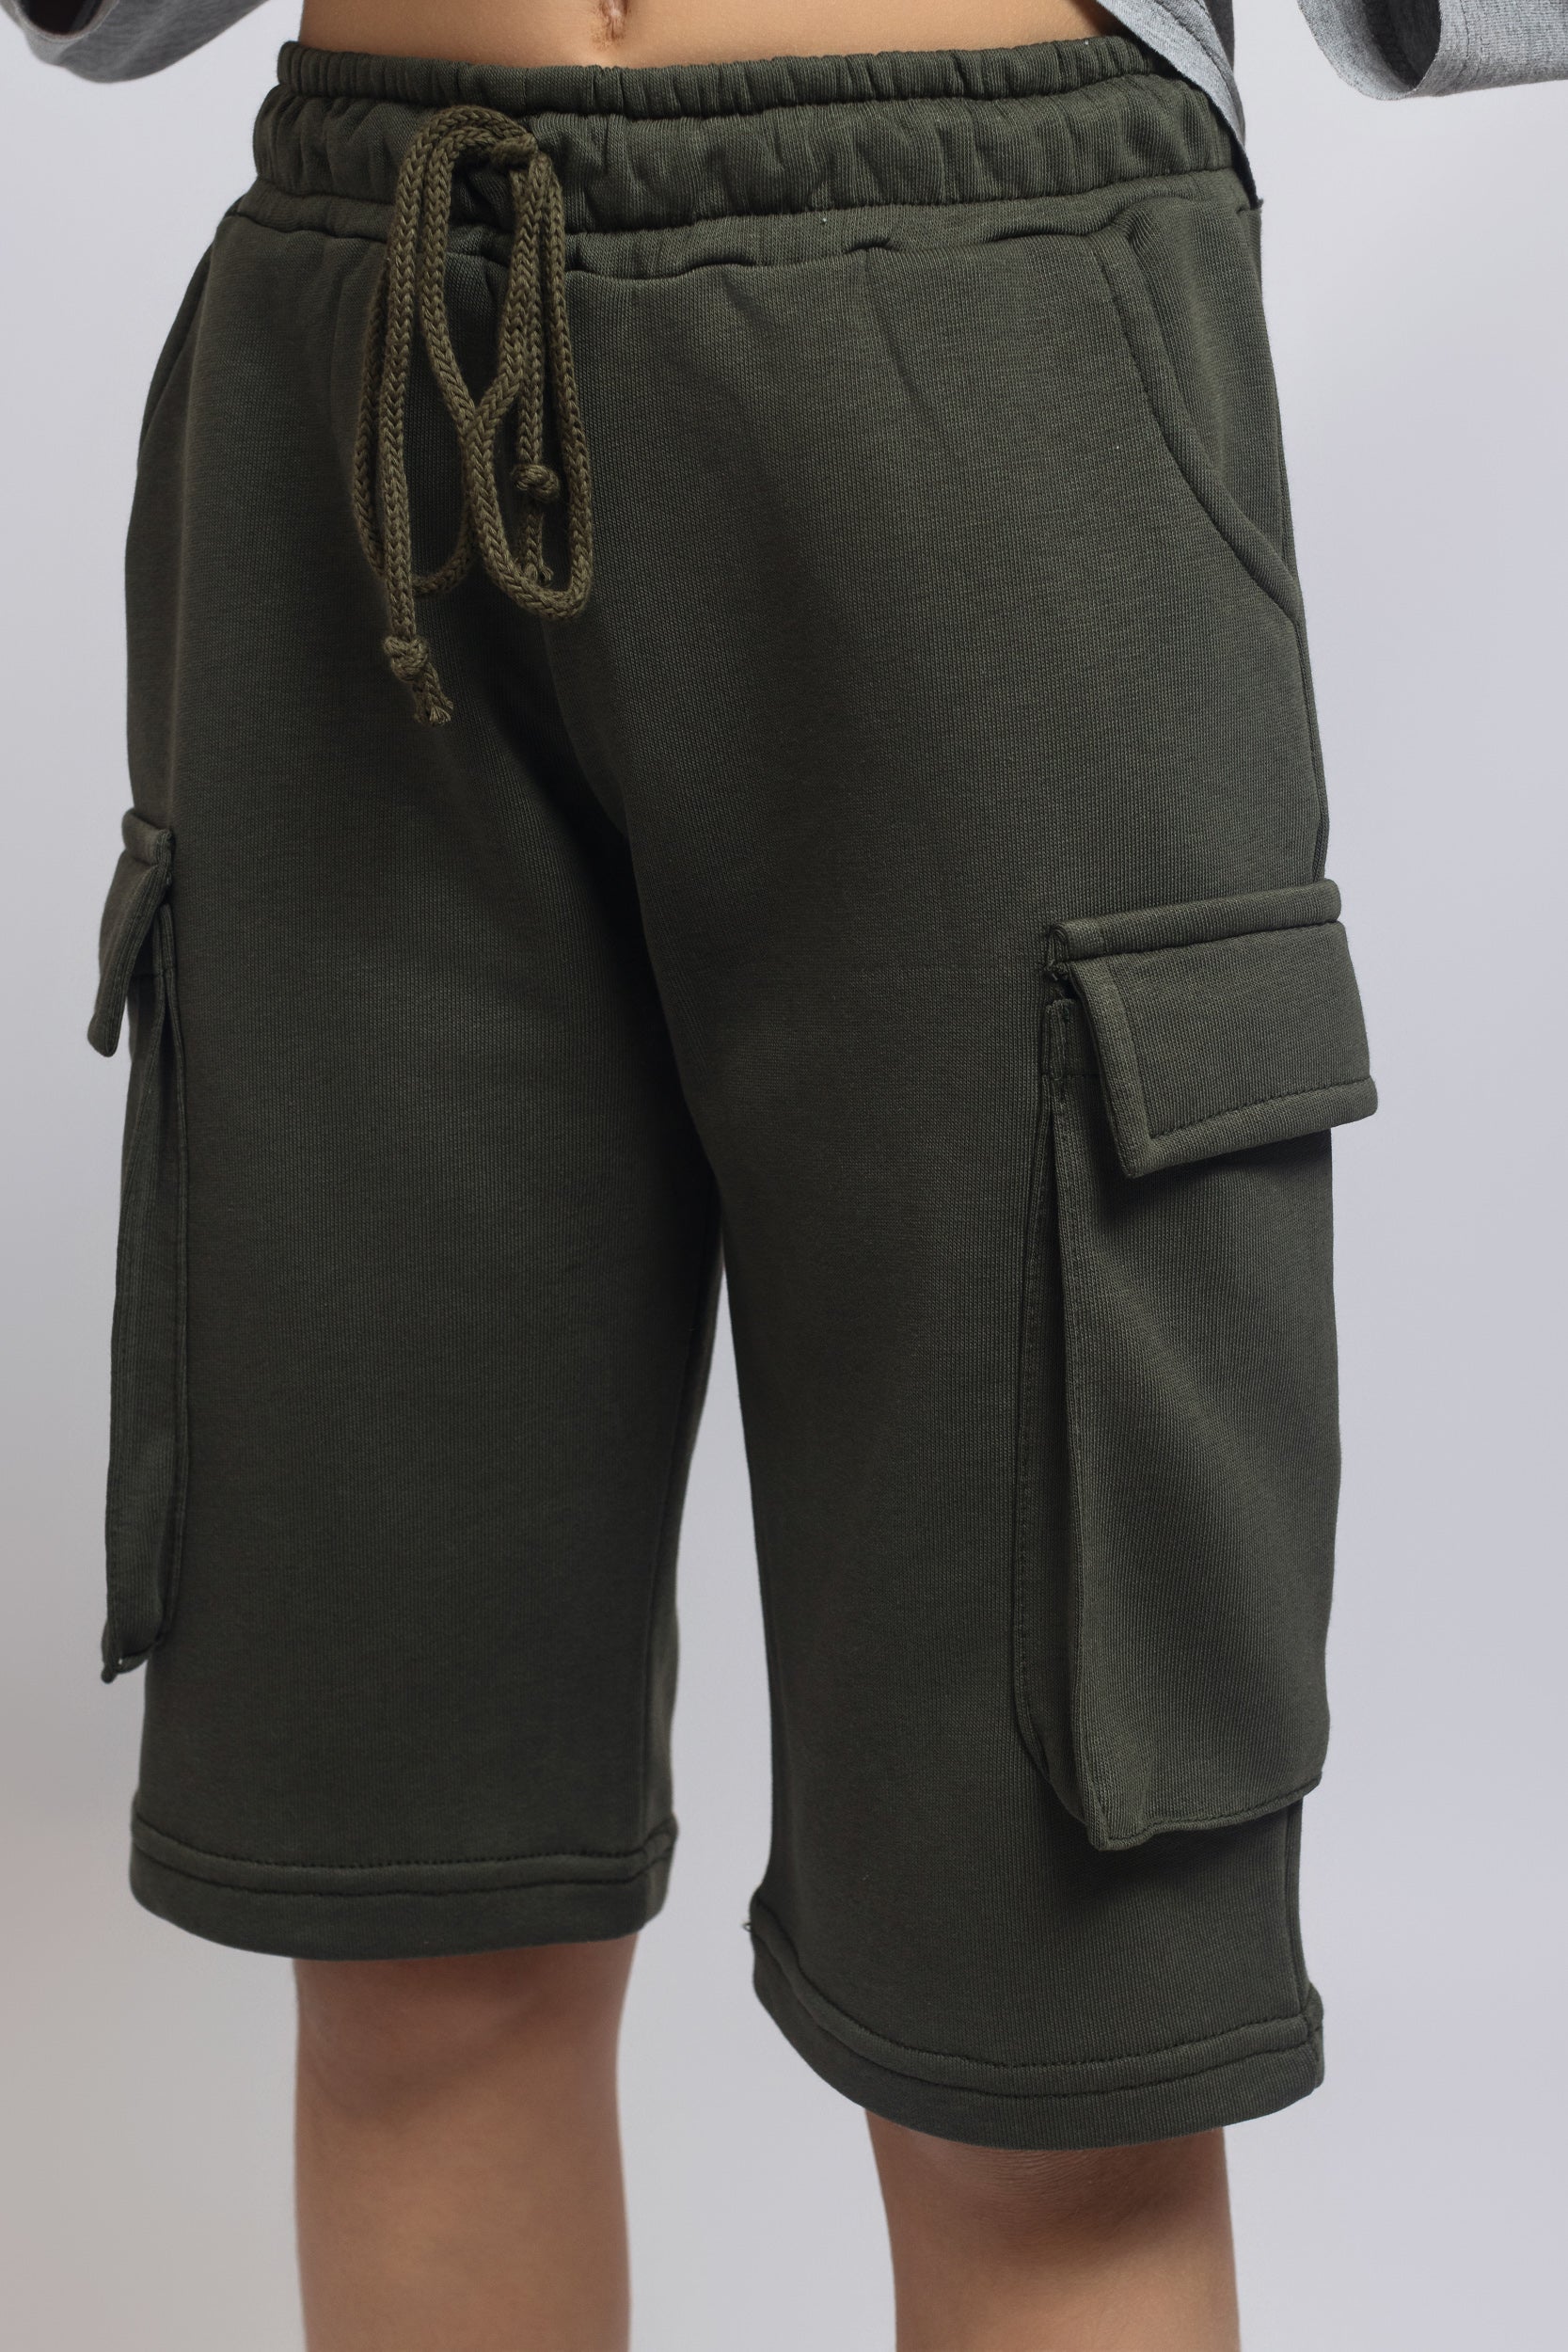 Cargo Shorts For Boys - Khaki